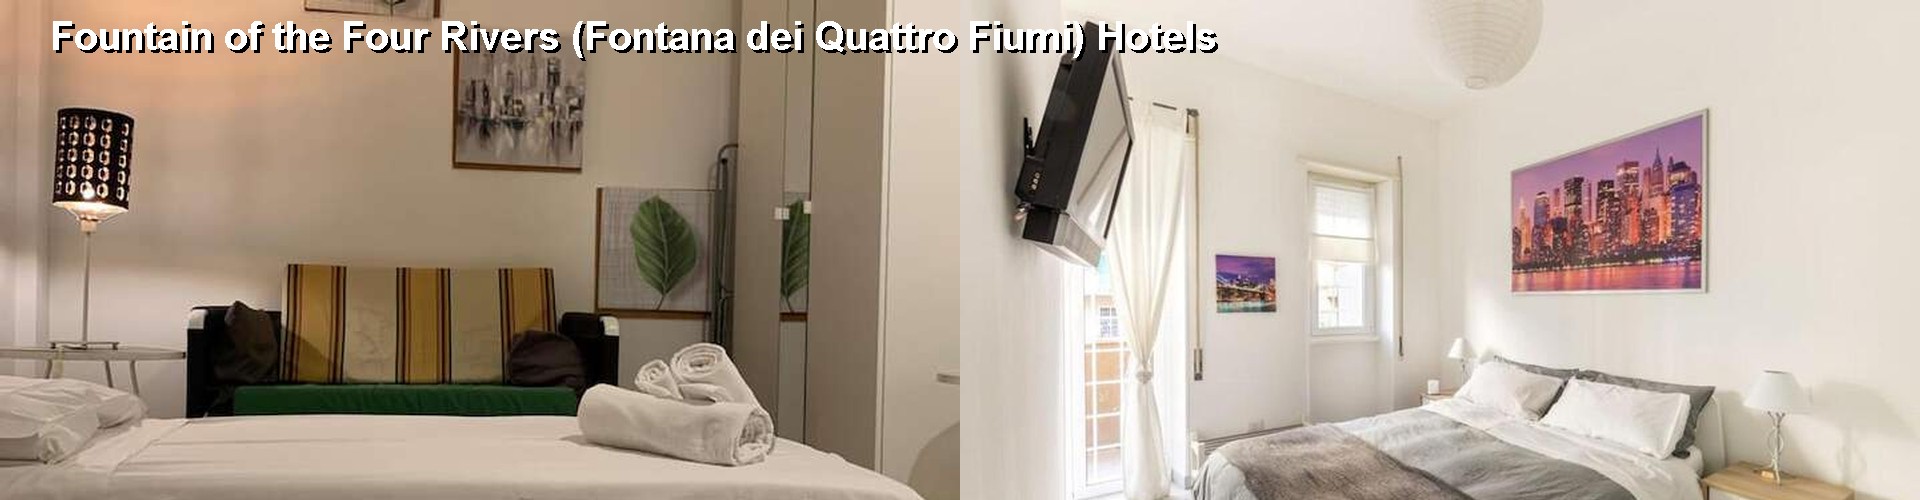 5 Best Hotels near Fountain of the Four Rivers (Fontana dei Quattro Fiumi)